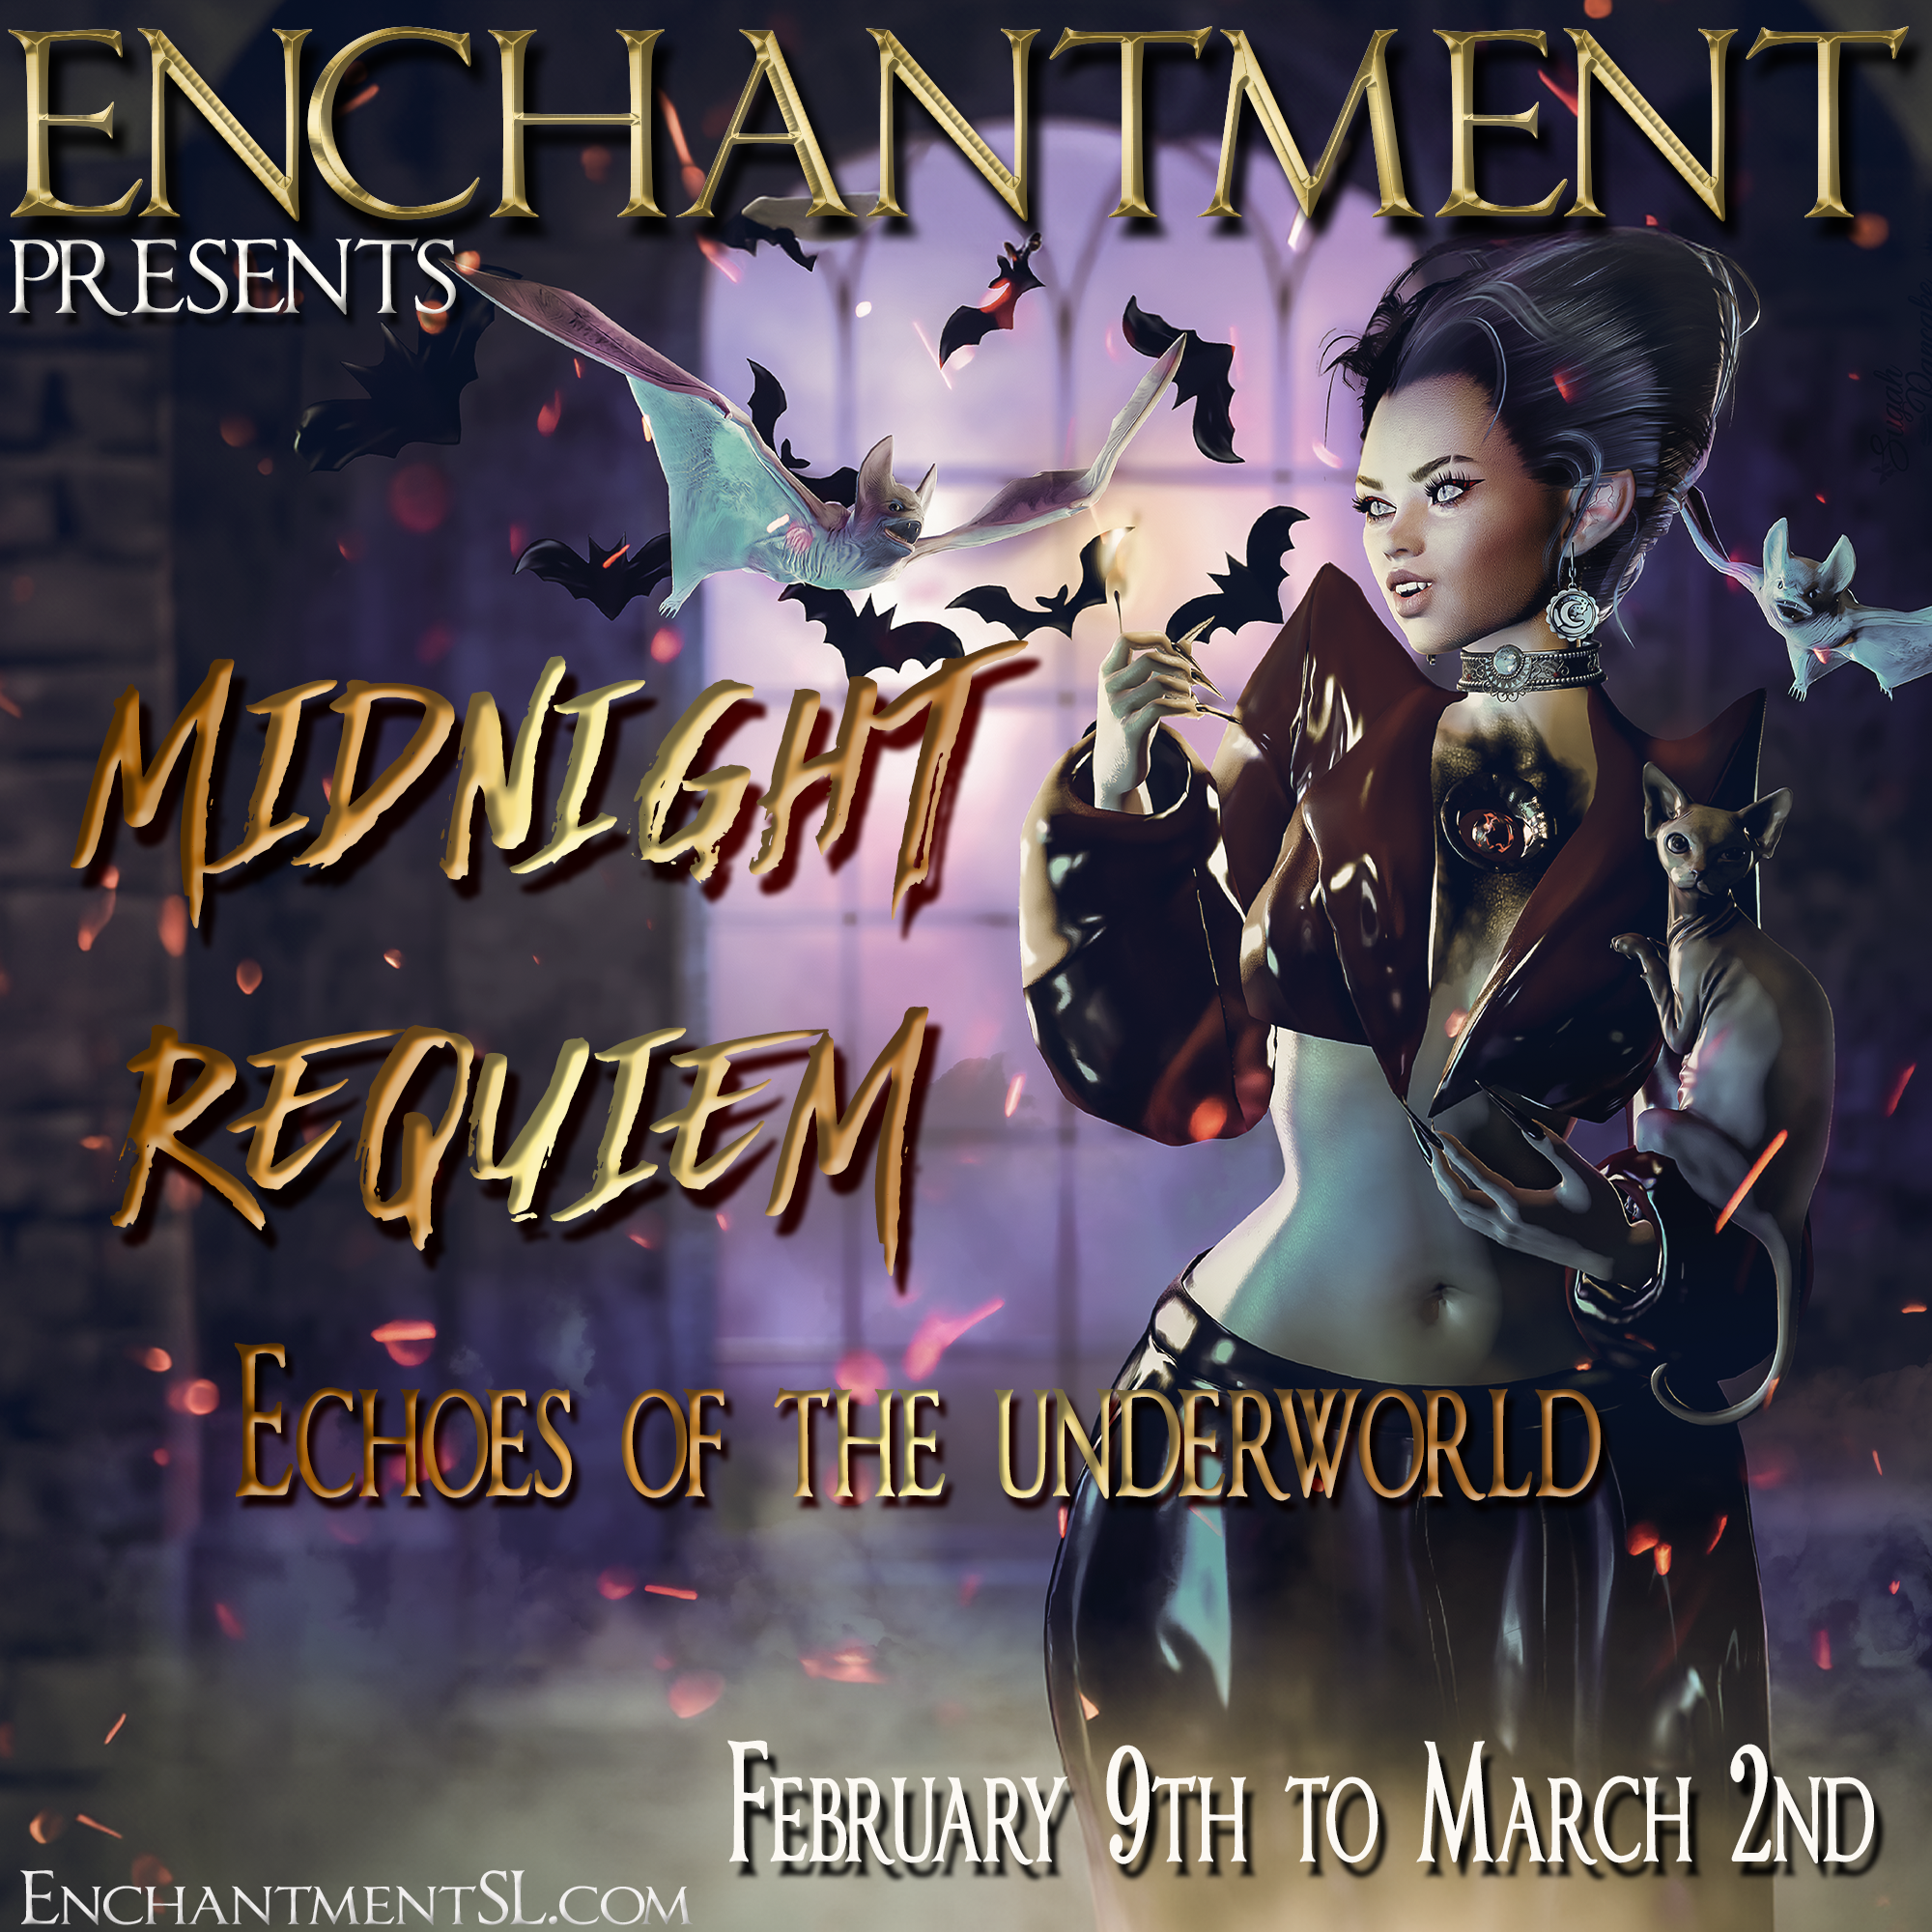 Press Release – Enchantment Presents Midnight Requiem